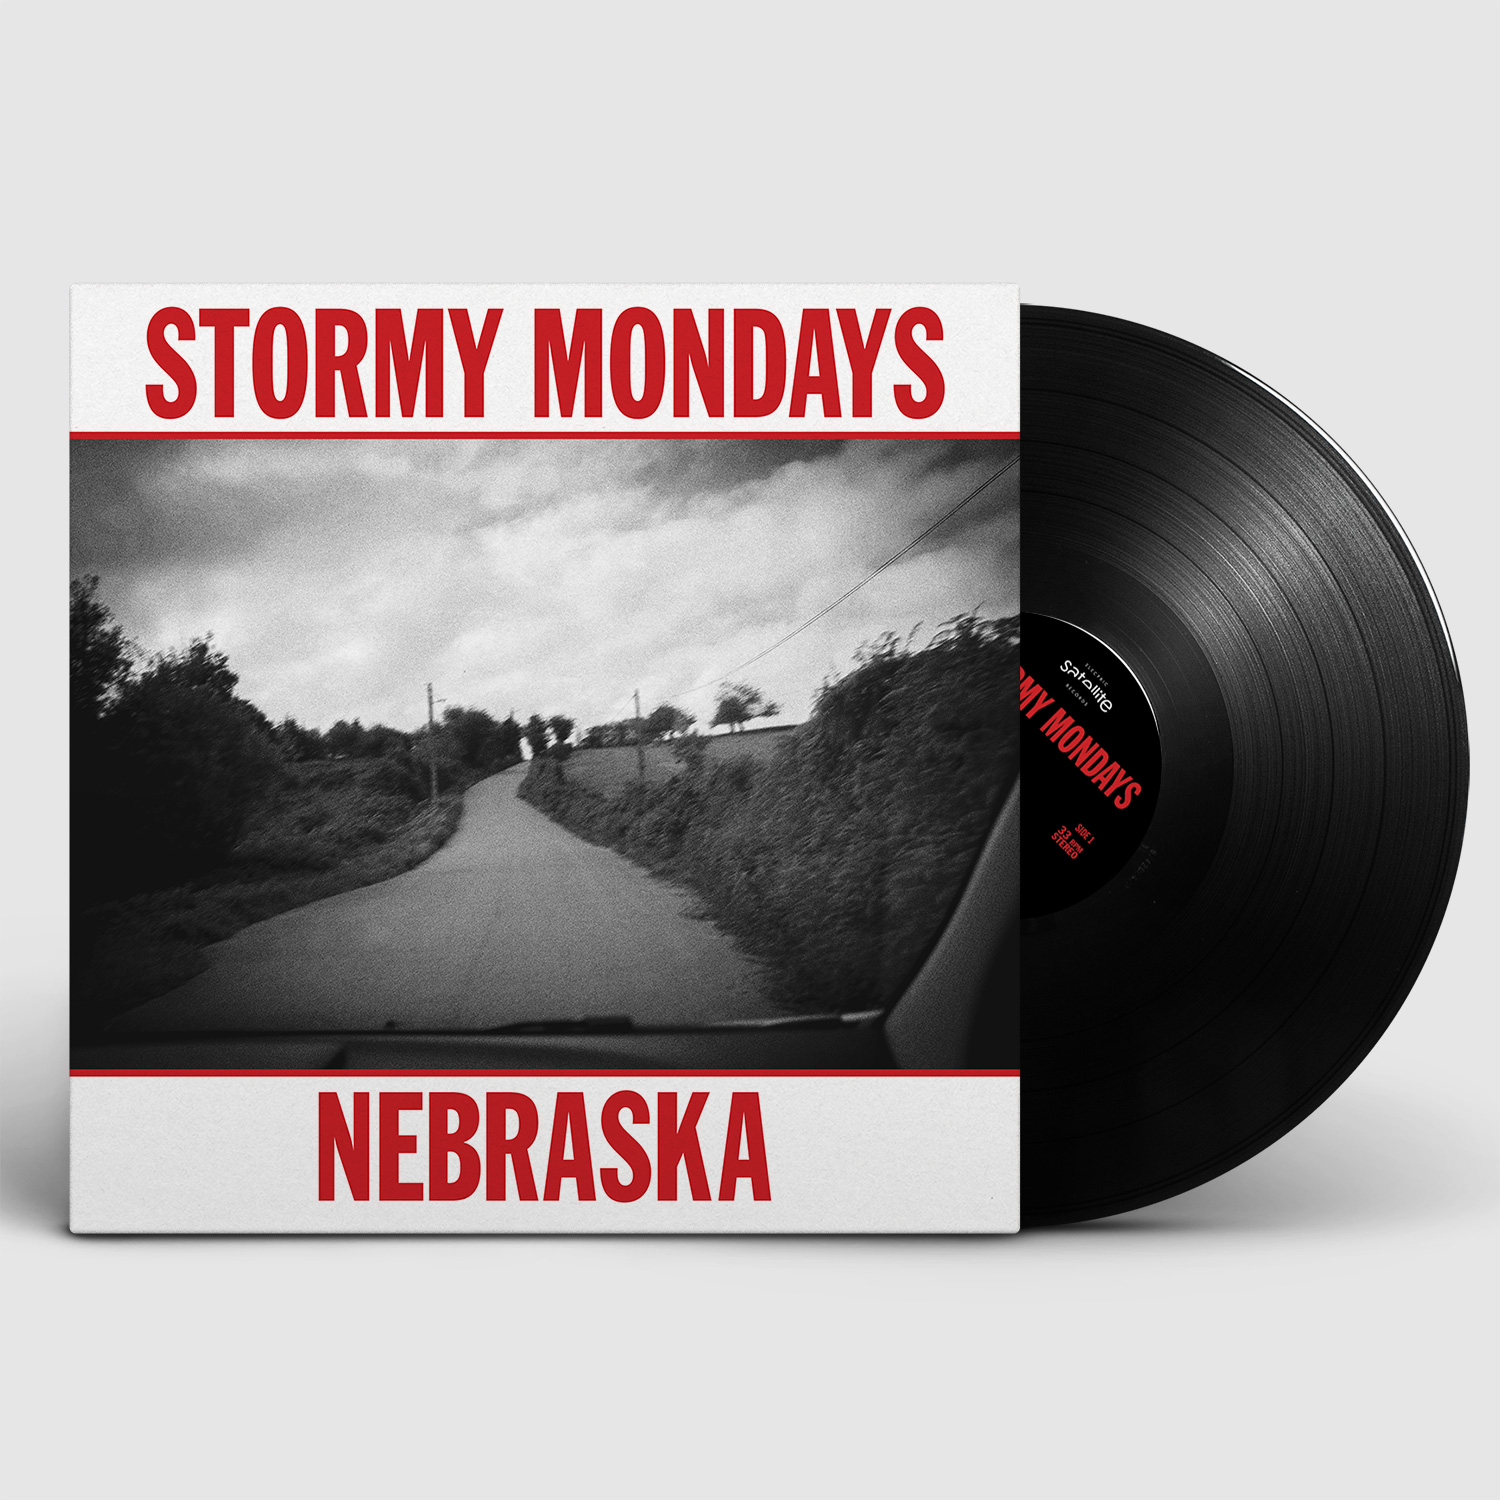 Nebraska (vinyl)